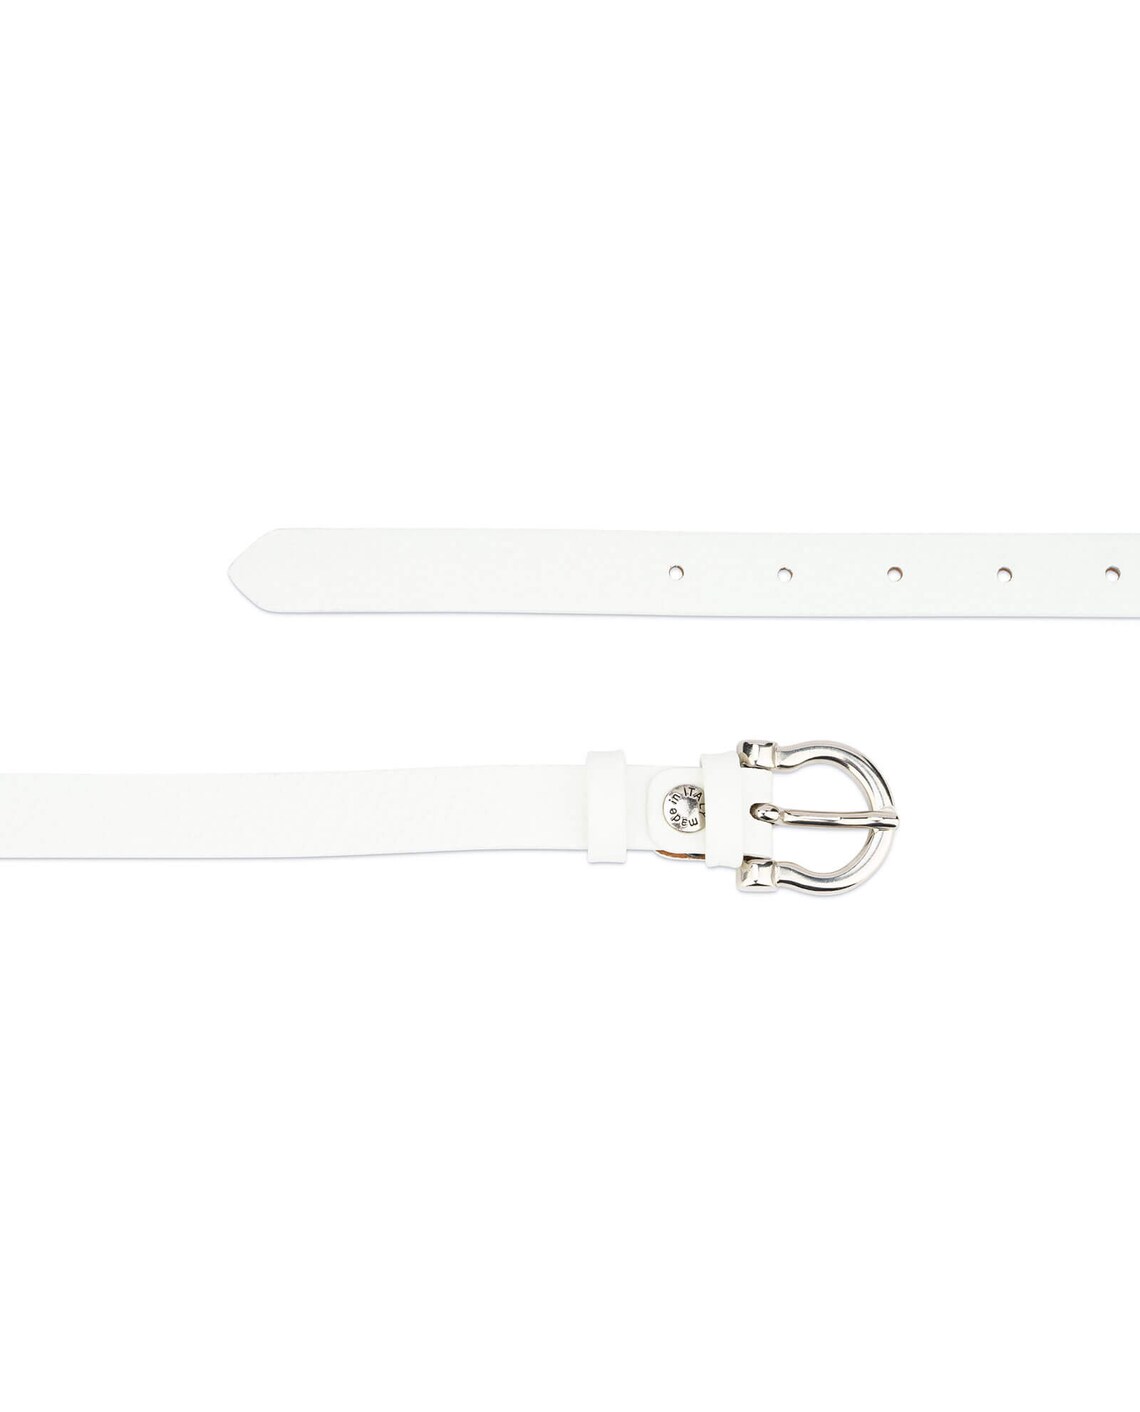 Buy White Leather Boys Belts | LeatherBeltsOnline.com